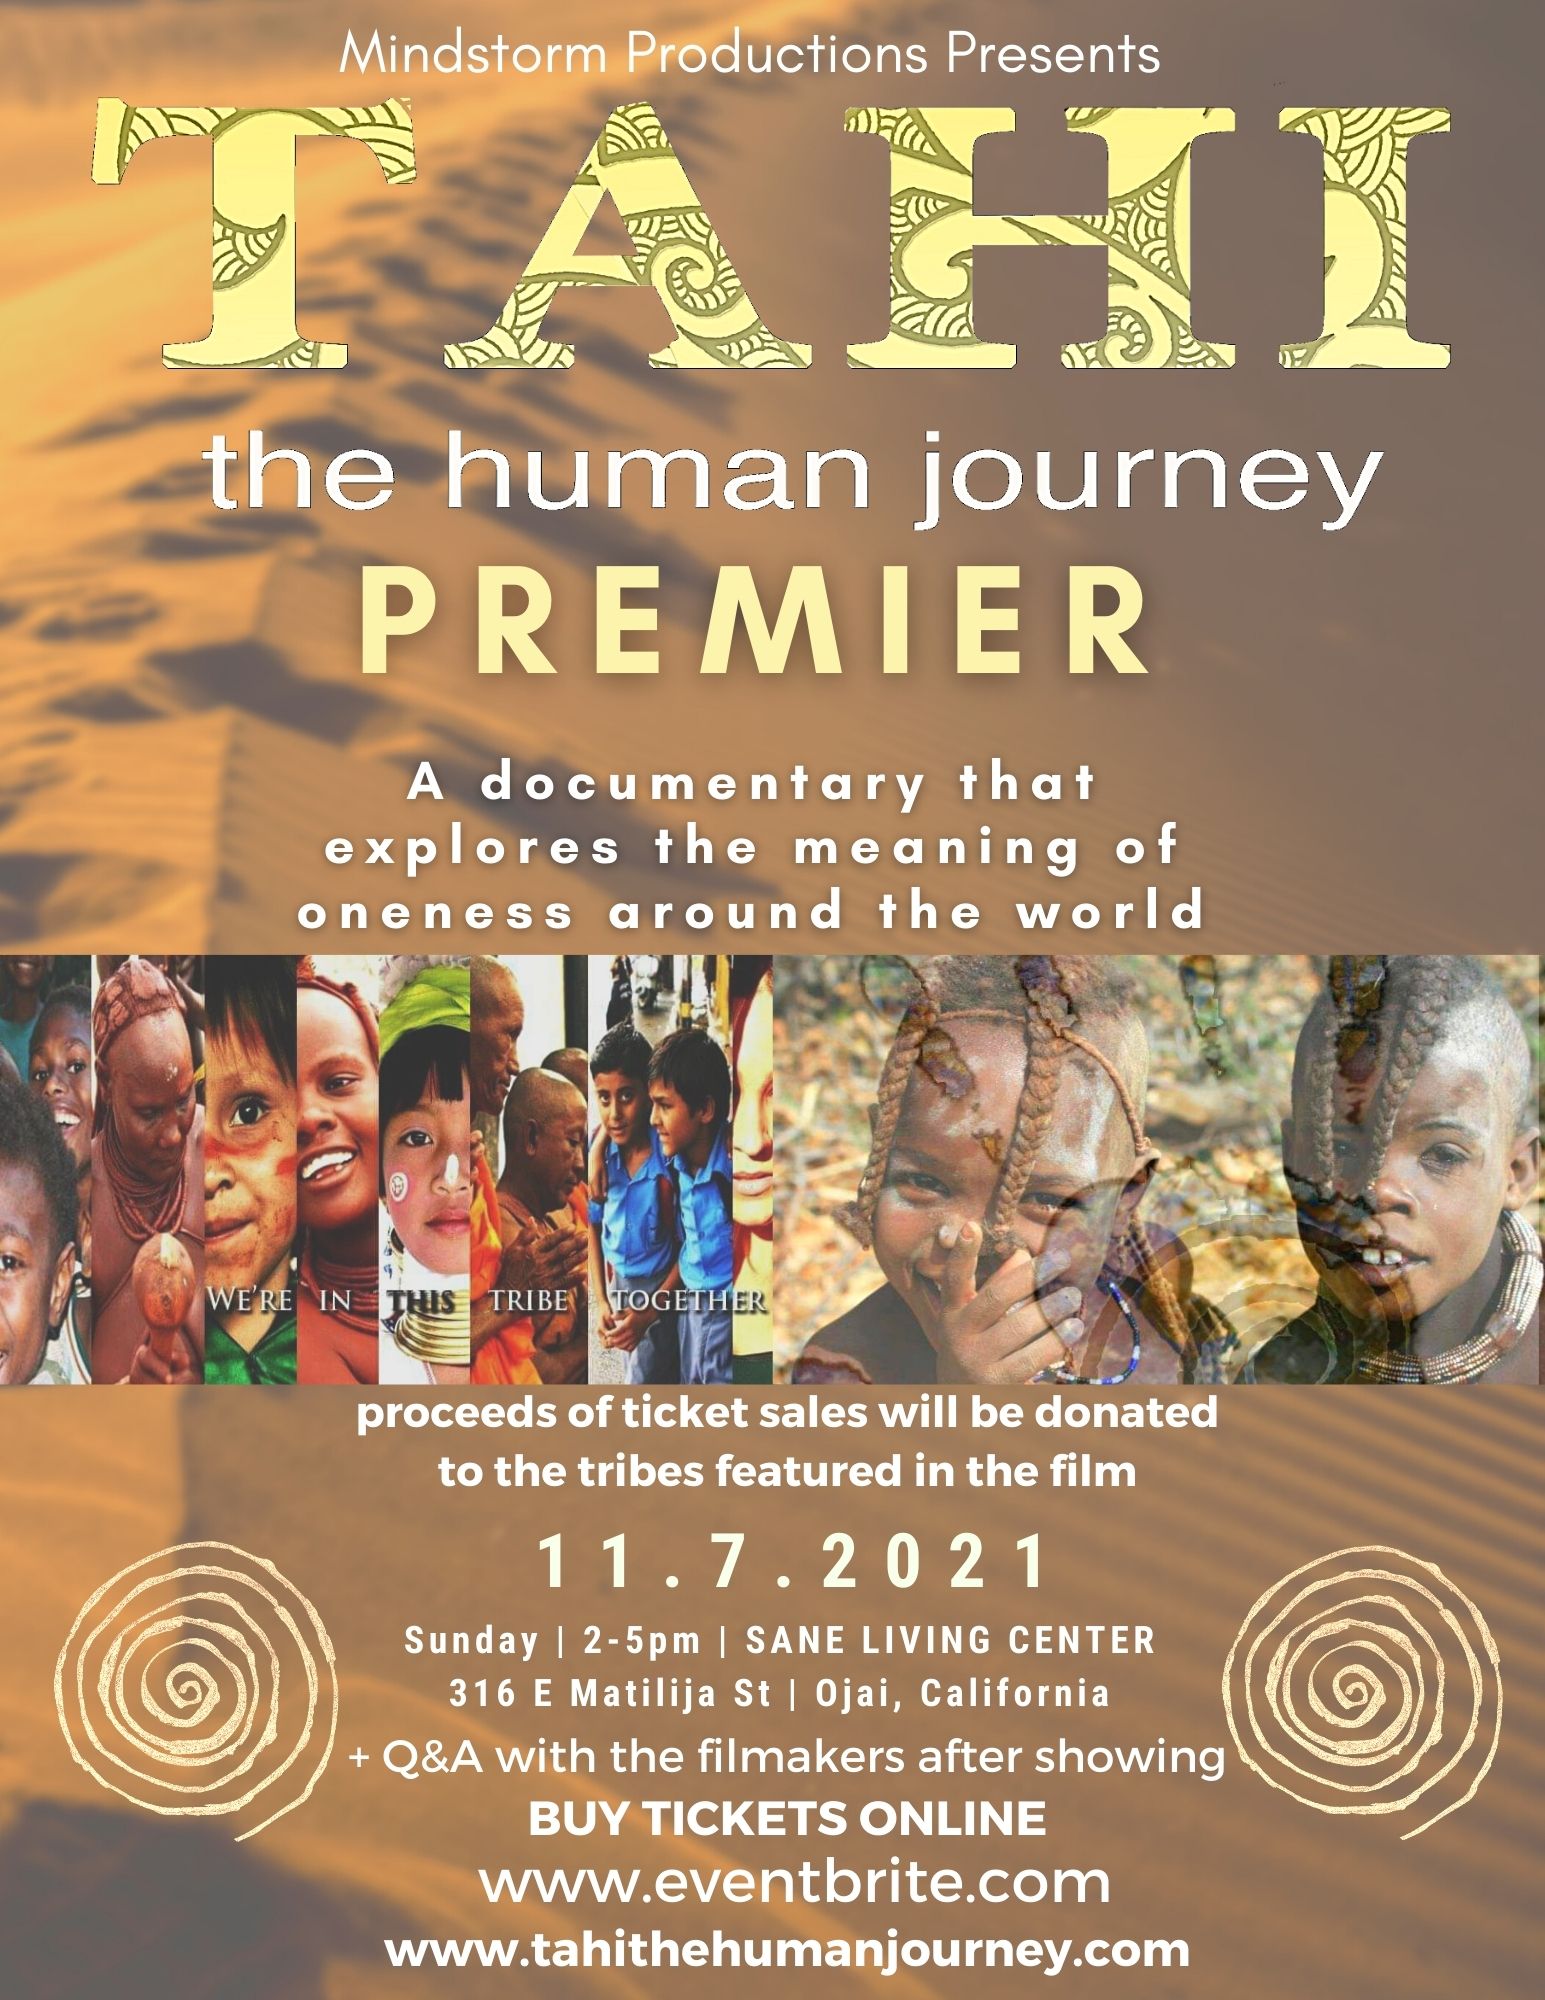 Tahi the human journey PREMIER at Sane Living Center, Ojai CA, Sunday Nov 7th at 2pm